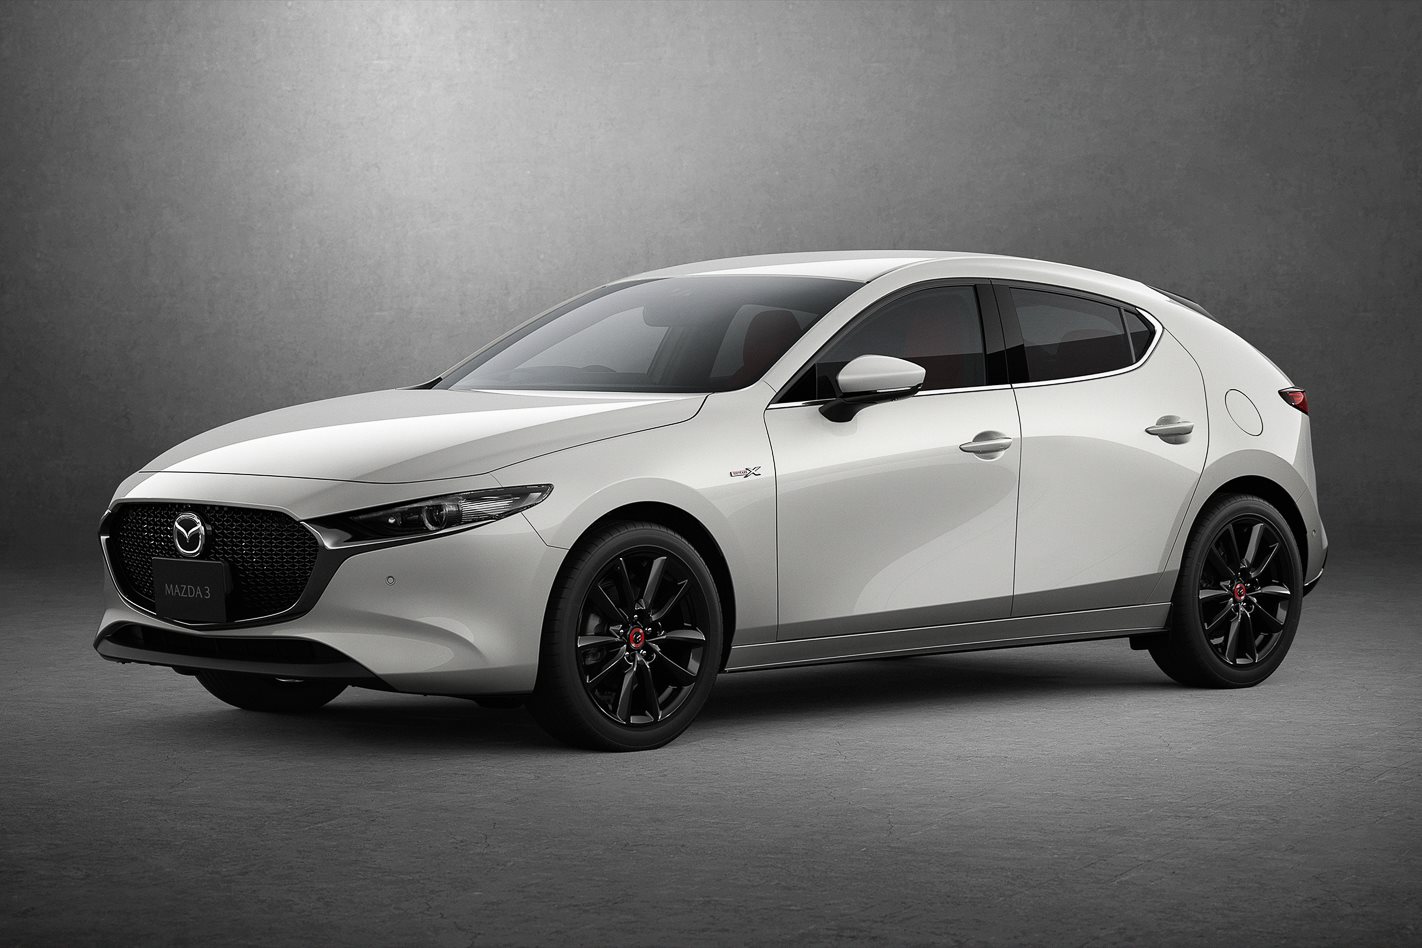 2021 Mazda 3 update adds power and suspension upgrades